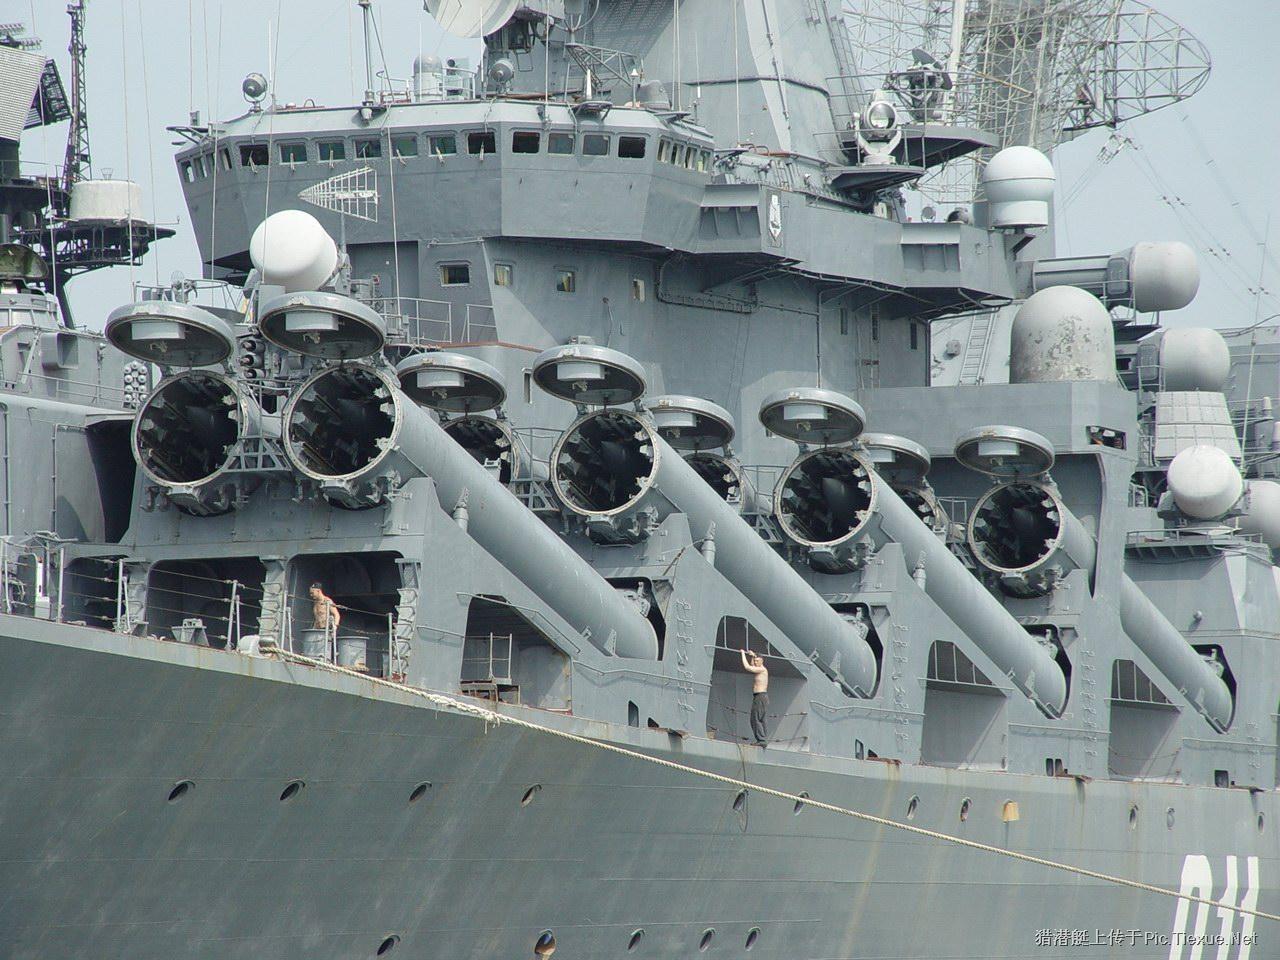 Slava Class, Kapal Perang Warisan Uni Soviet yang Saat Ini Digunakan Oleh Rusia